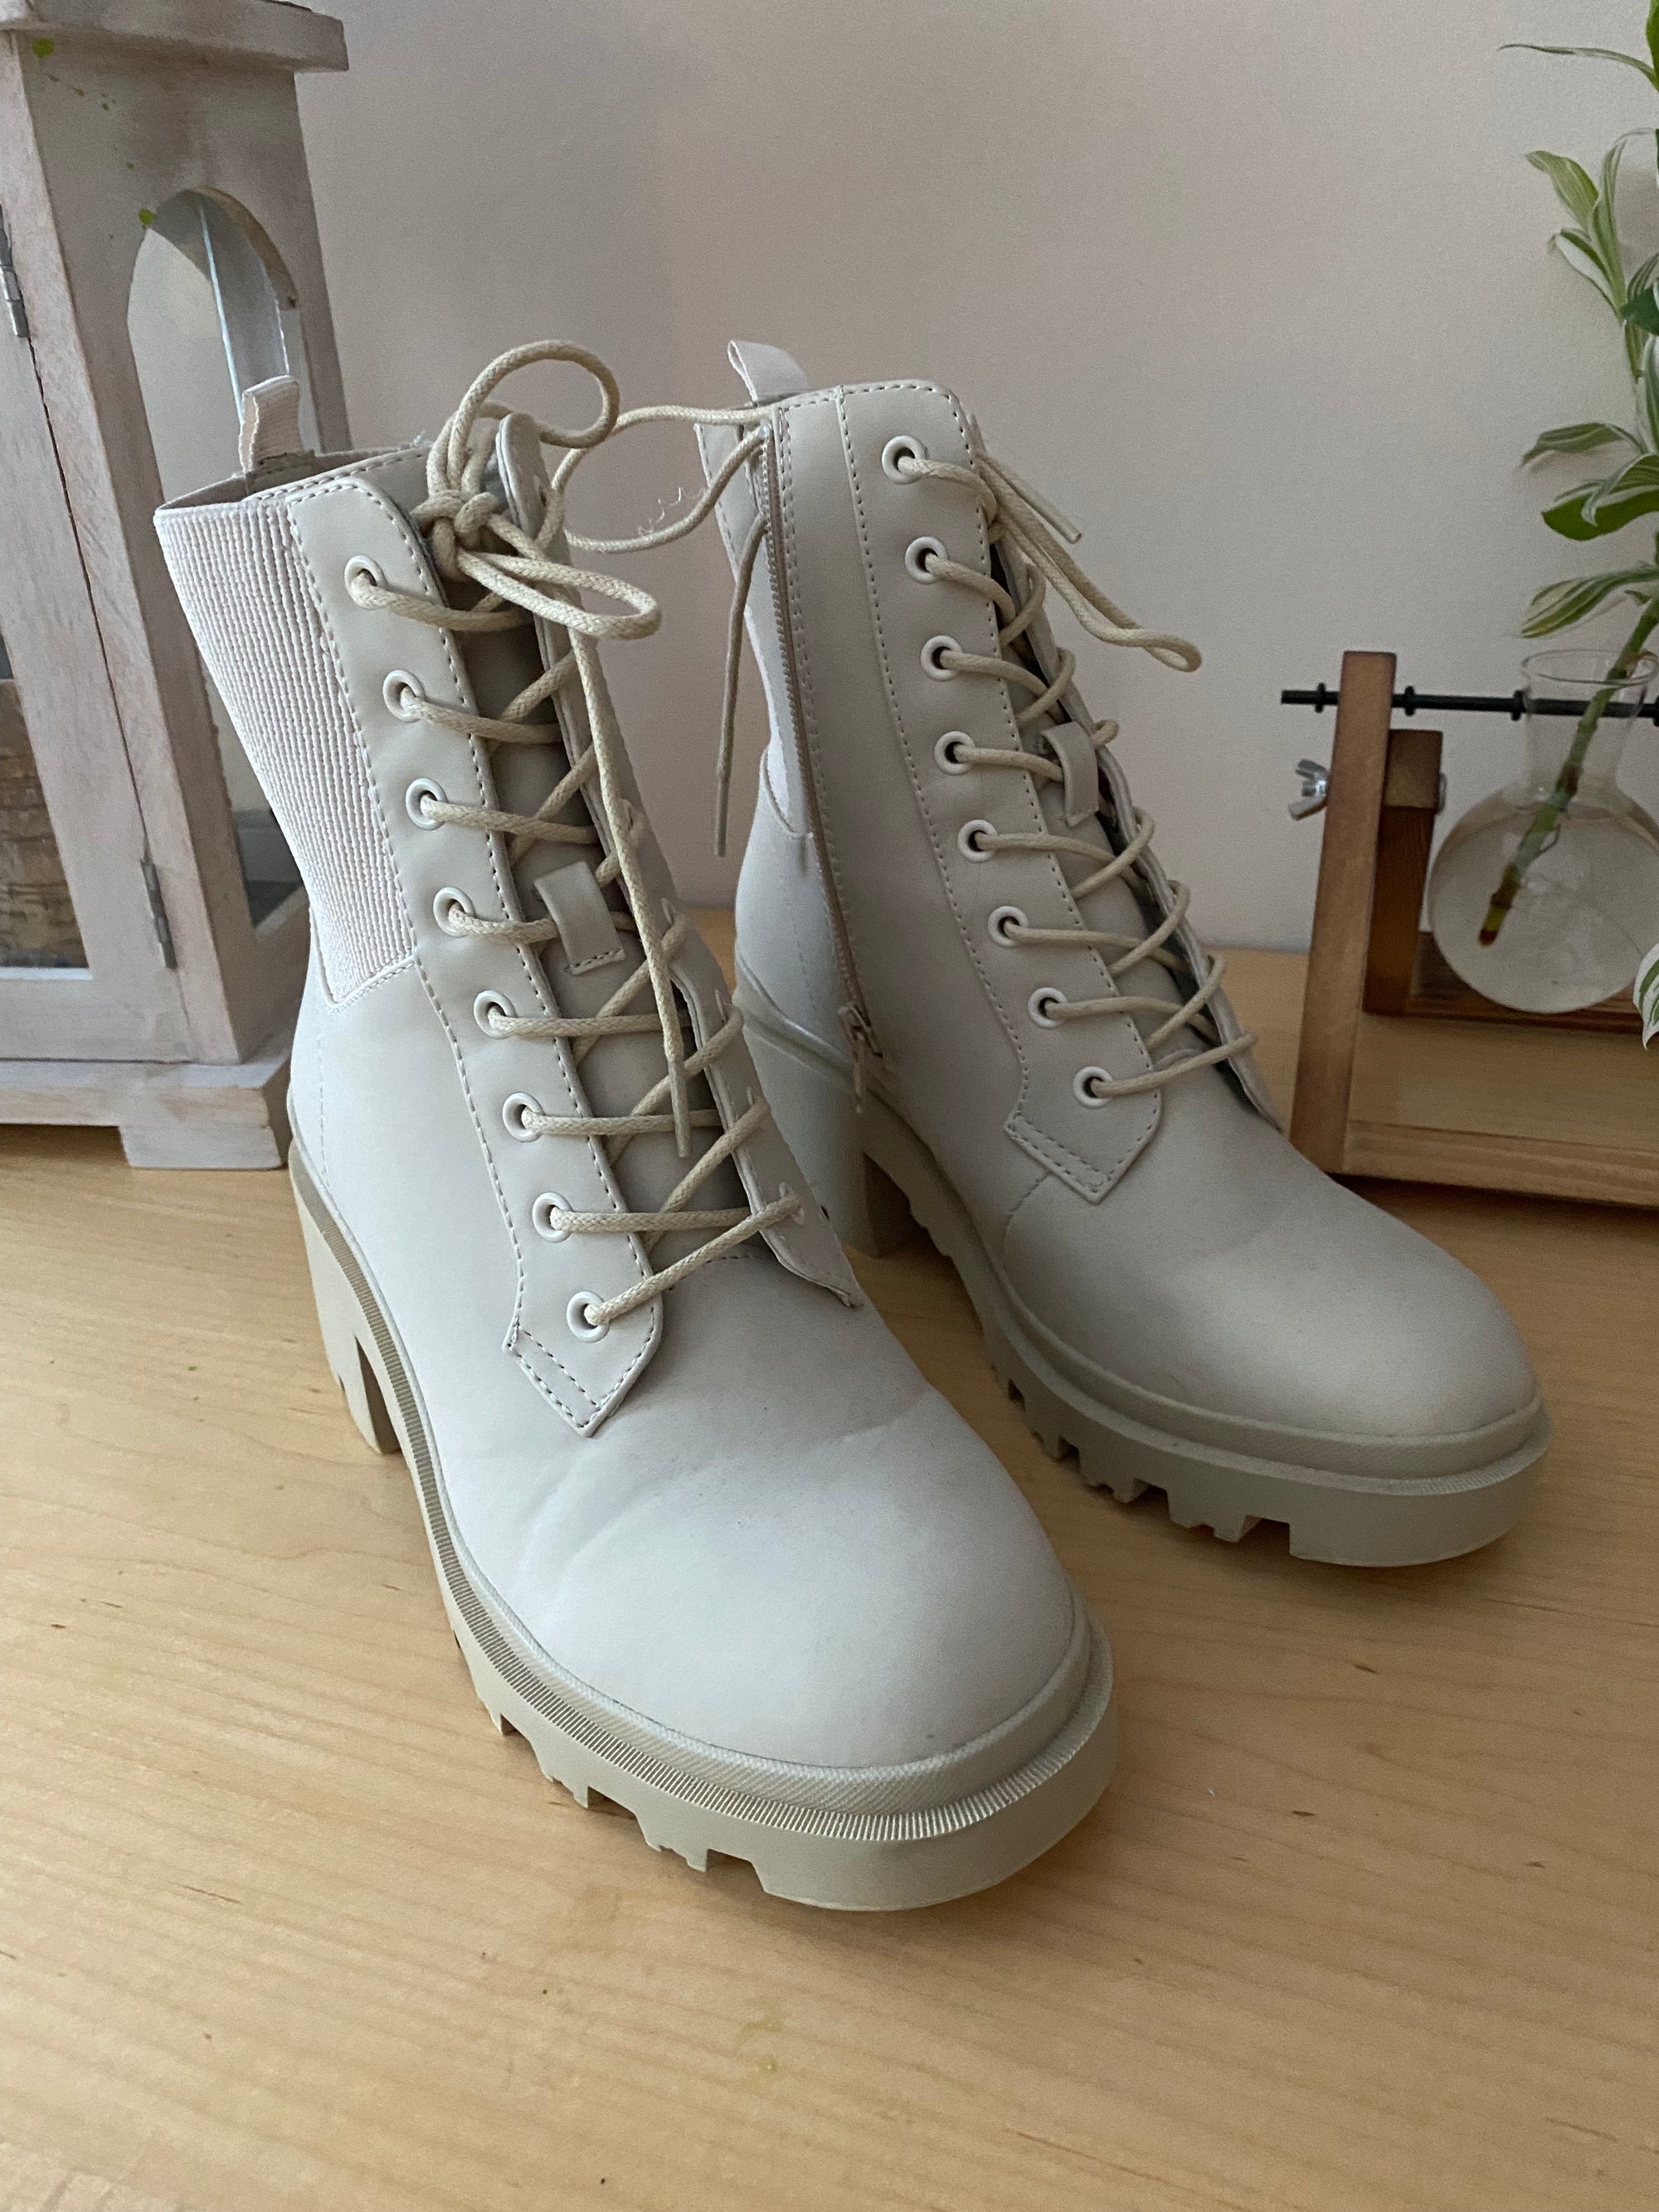 Zip Up Boots (Women's Size 5.5)